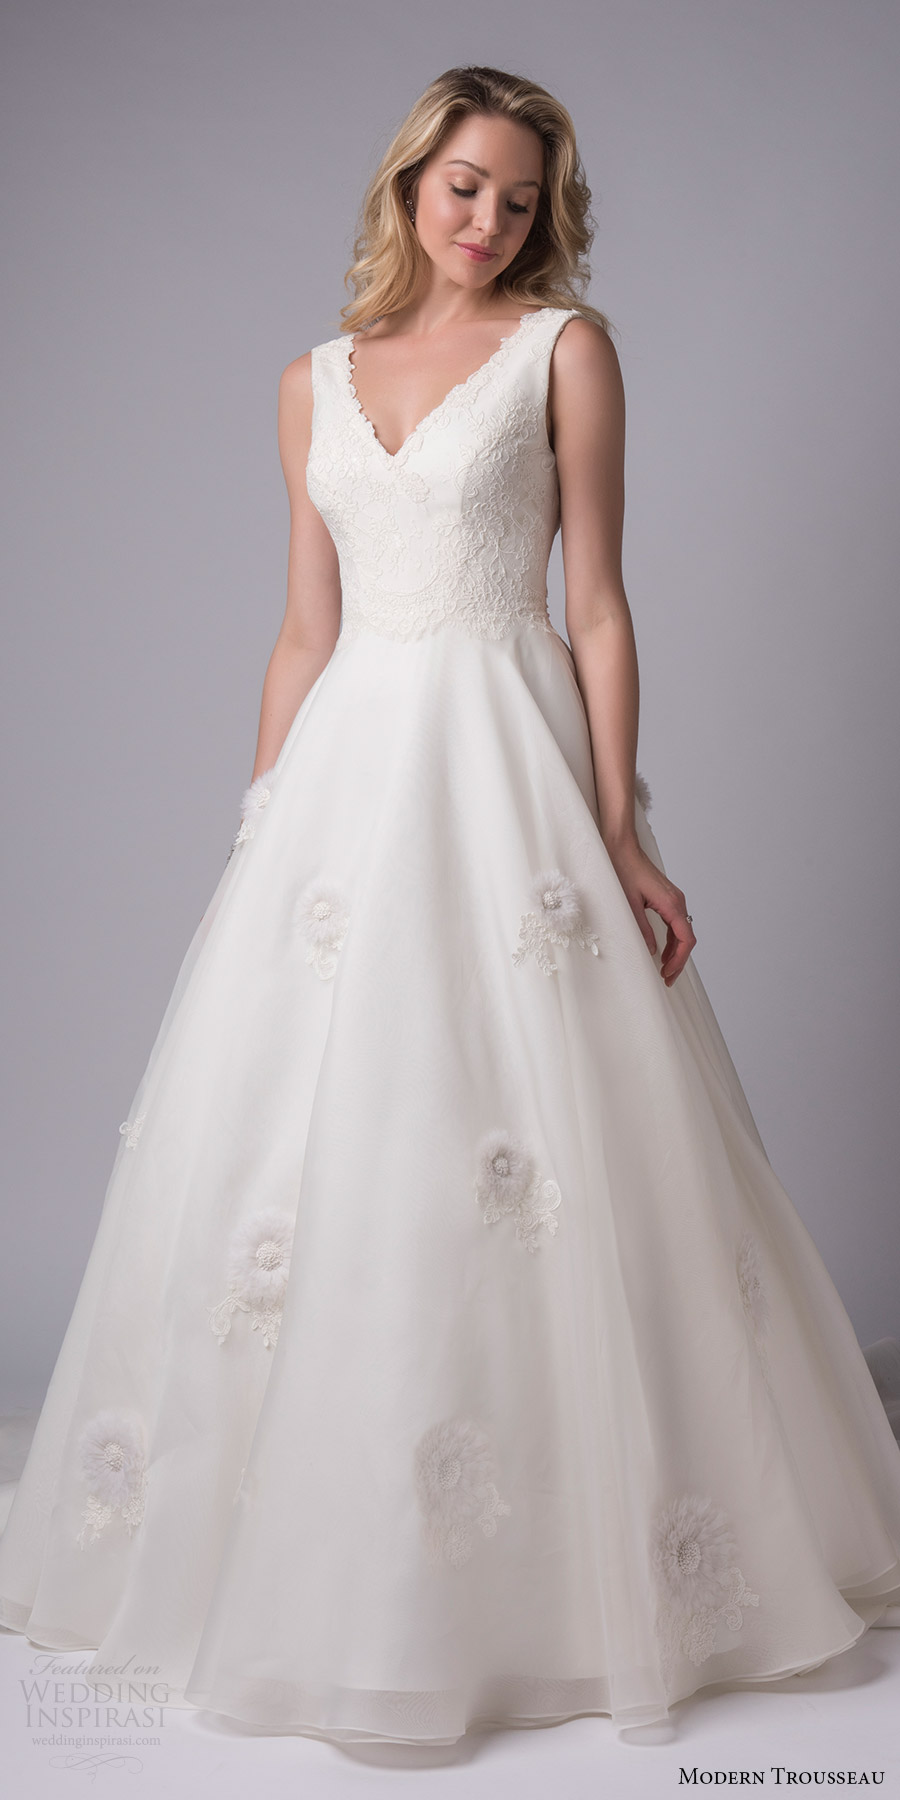 modern trousseau bridal fall 2017 sleeveless vneck lace bodice ball gown wedding dress (thea) mv handmade flower applique embellished skirt